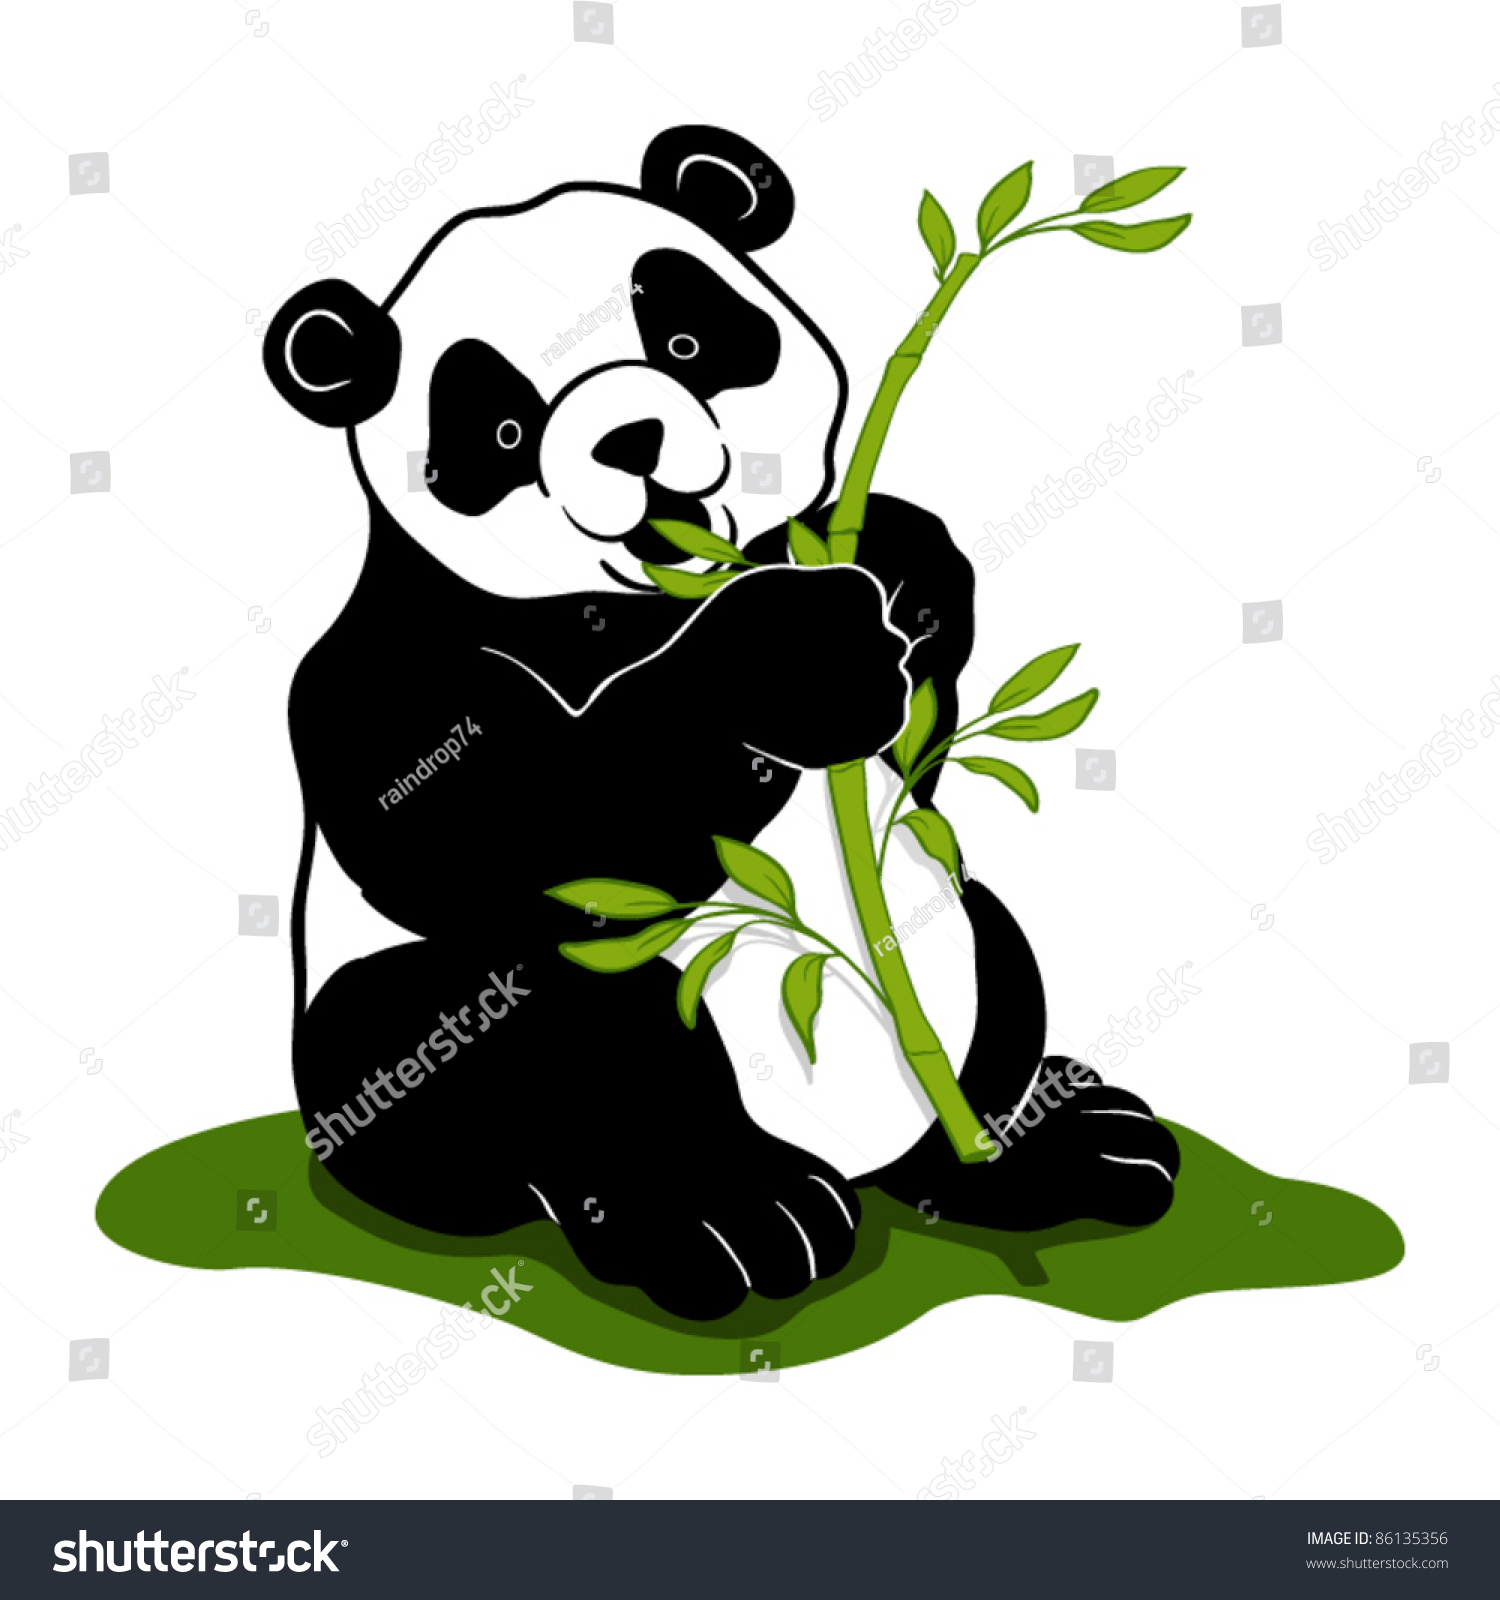 panda eating clipart - photo #41